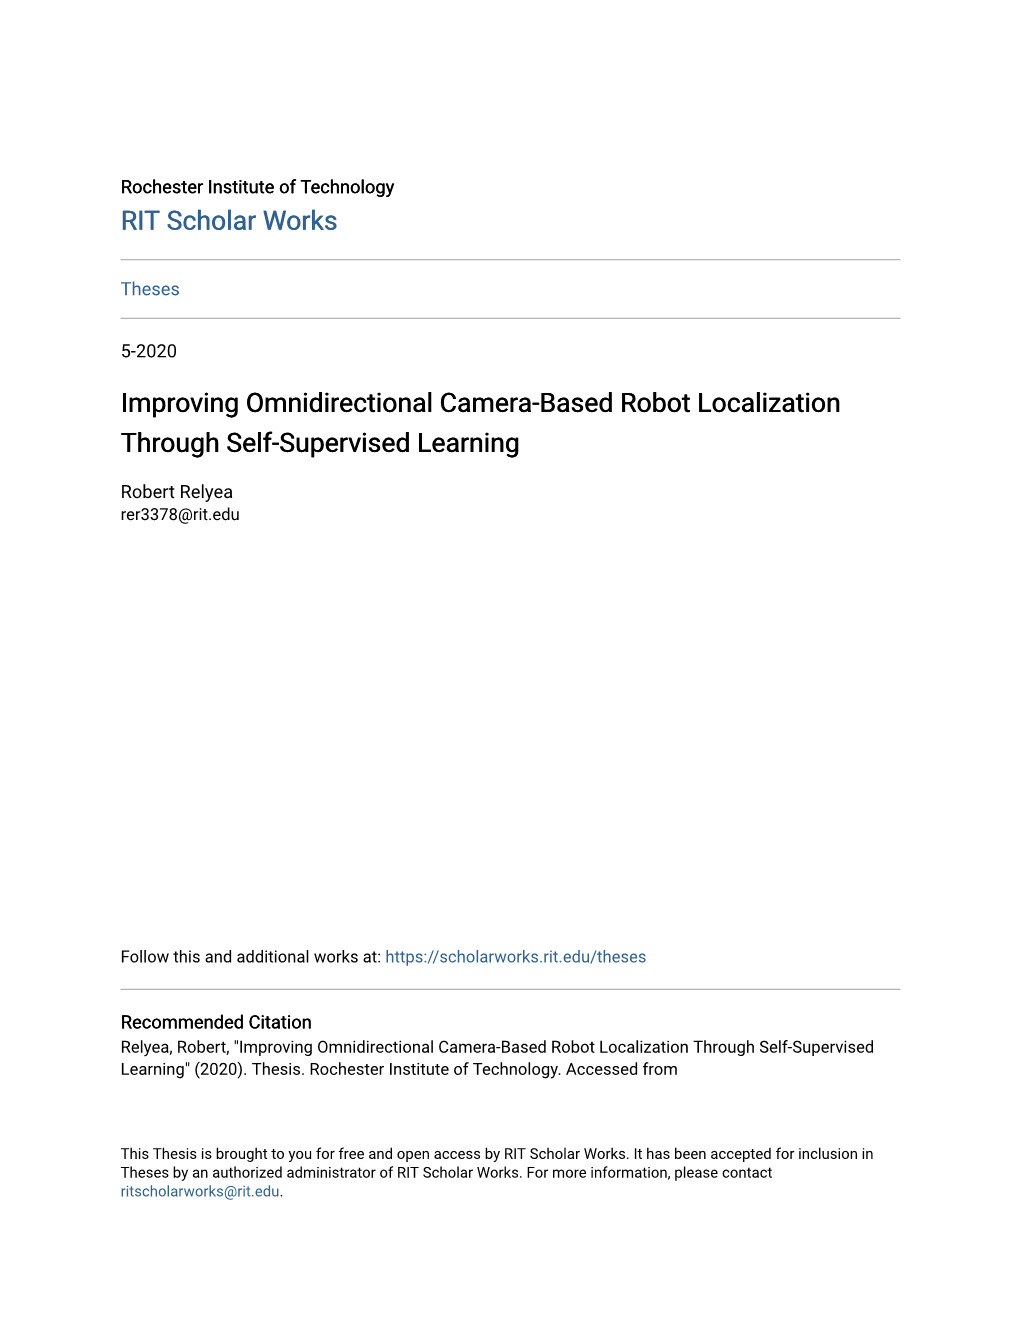 Improving Omnidirectional Camera-Based Robot Localization Through Self-Supervised Learning